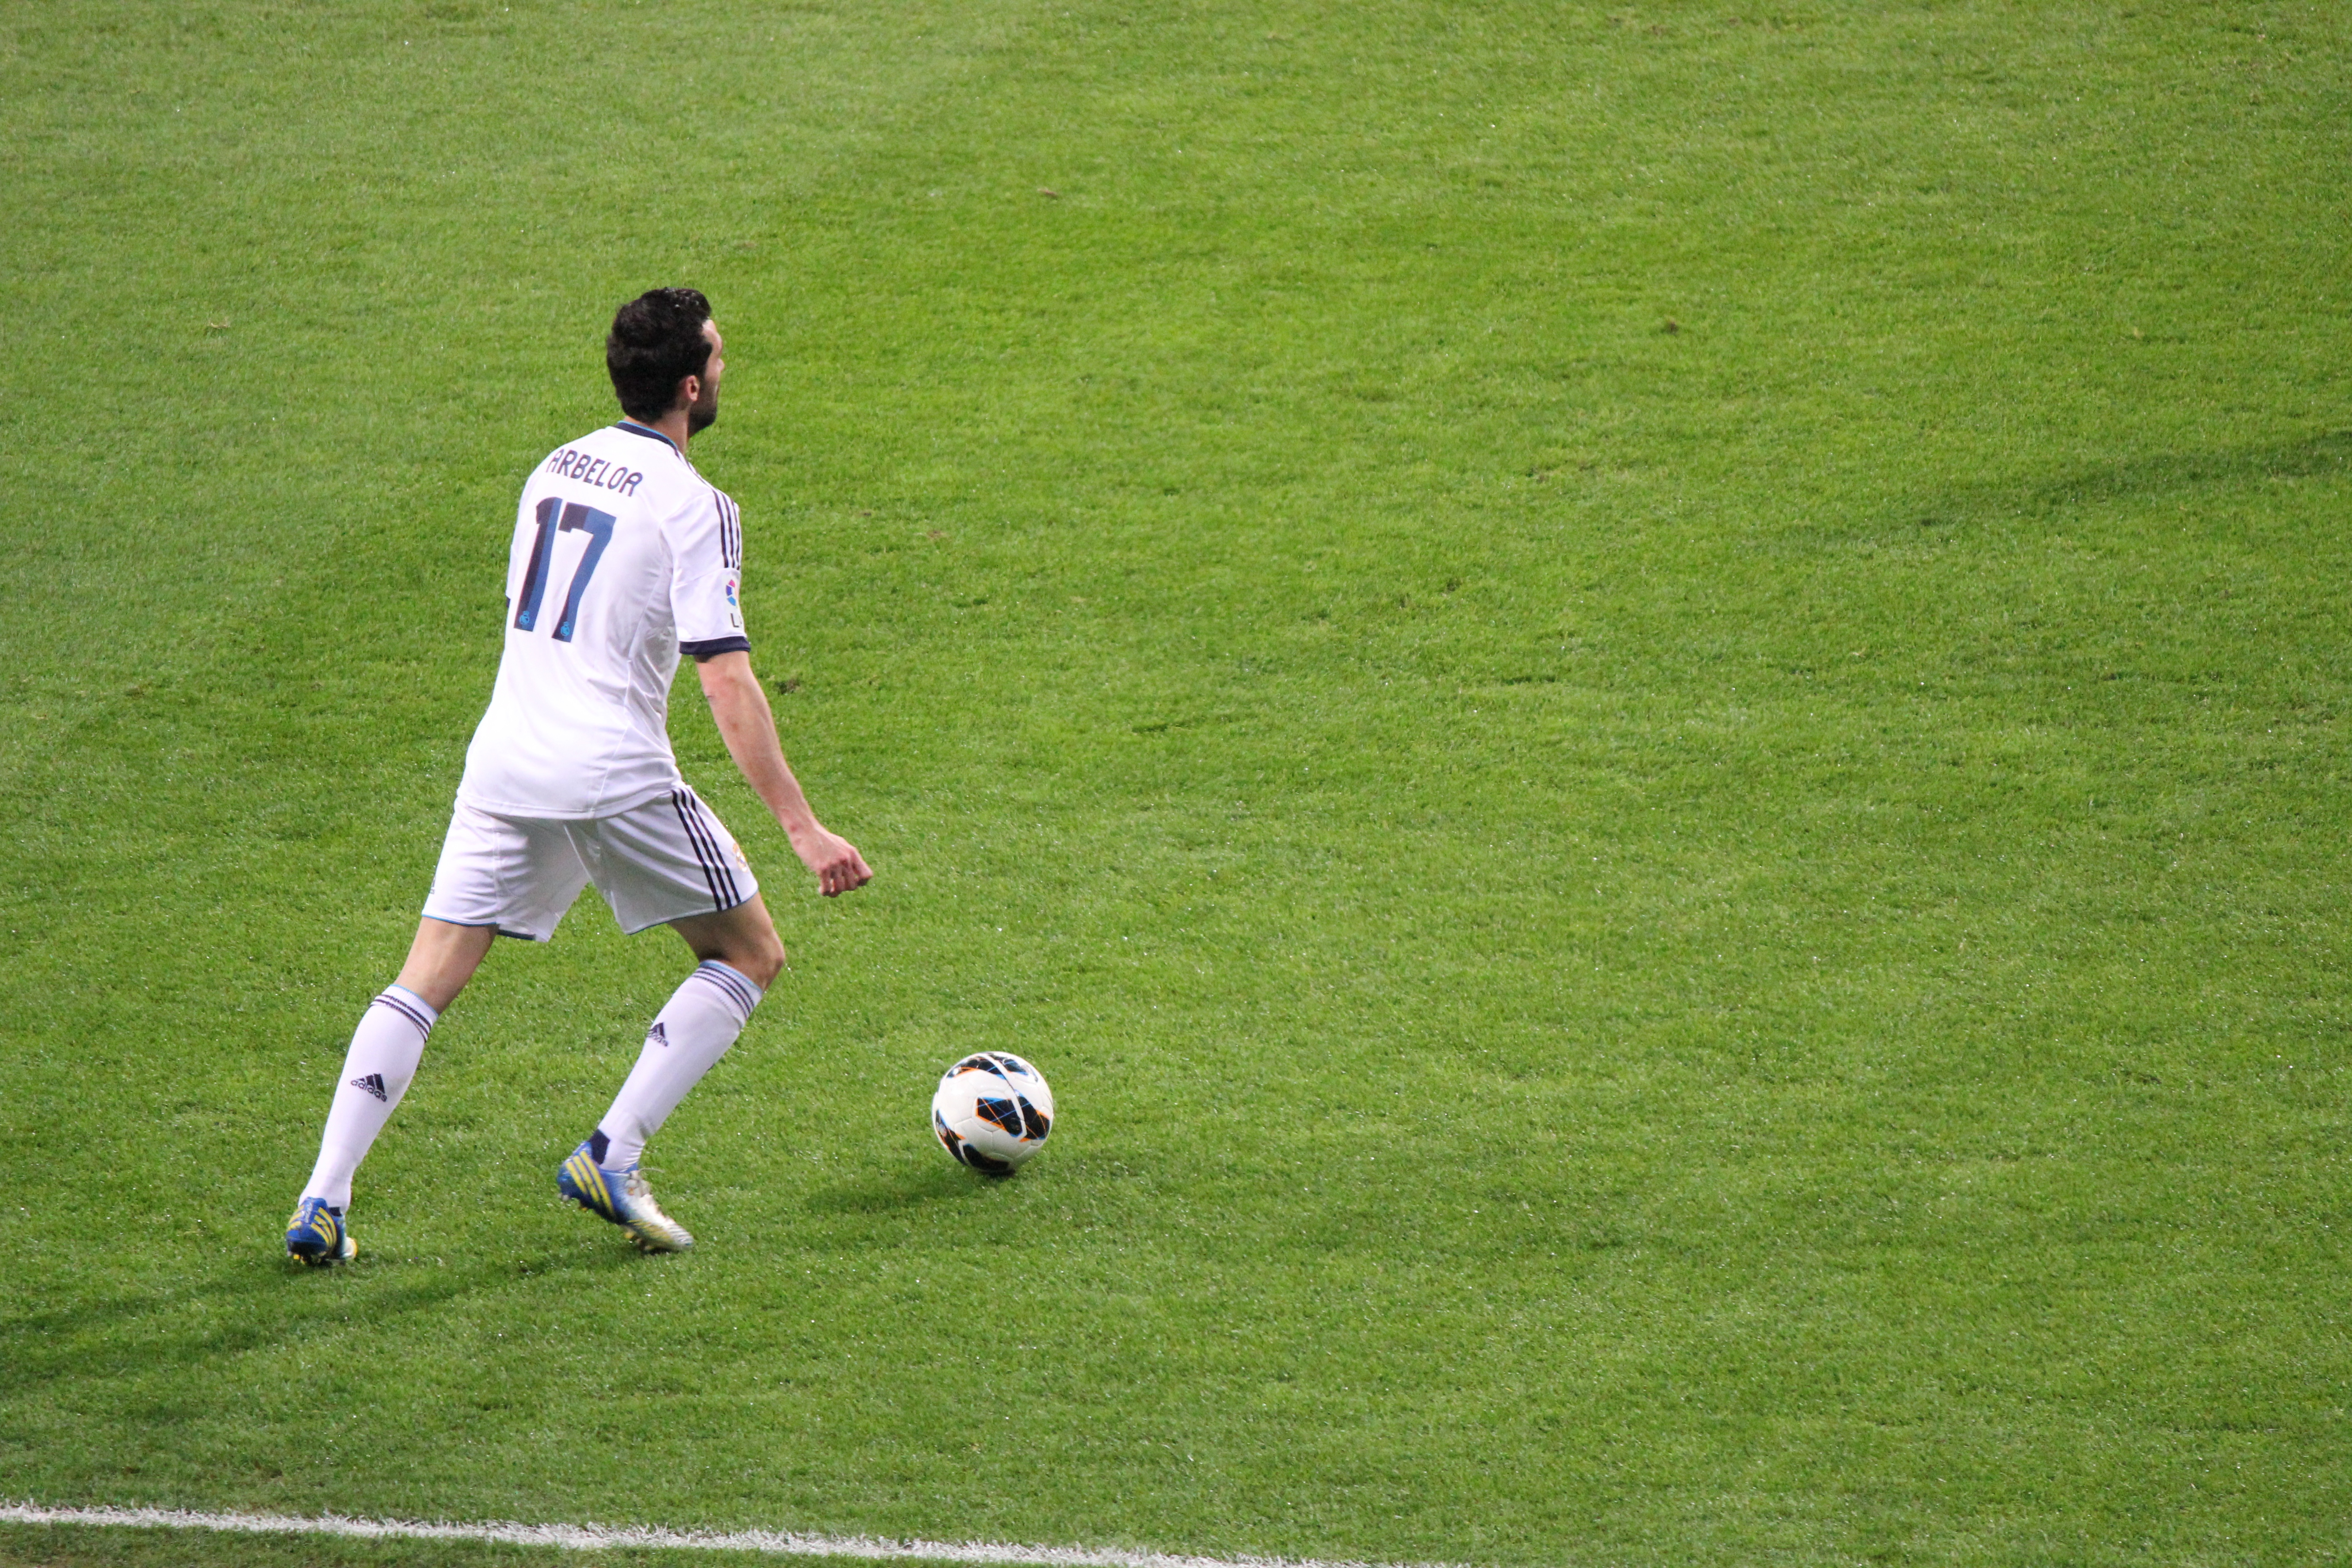 File:Real Madrid v Sevilla 10 February 2013 11.JPG - Wikimedia Commons